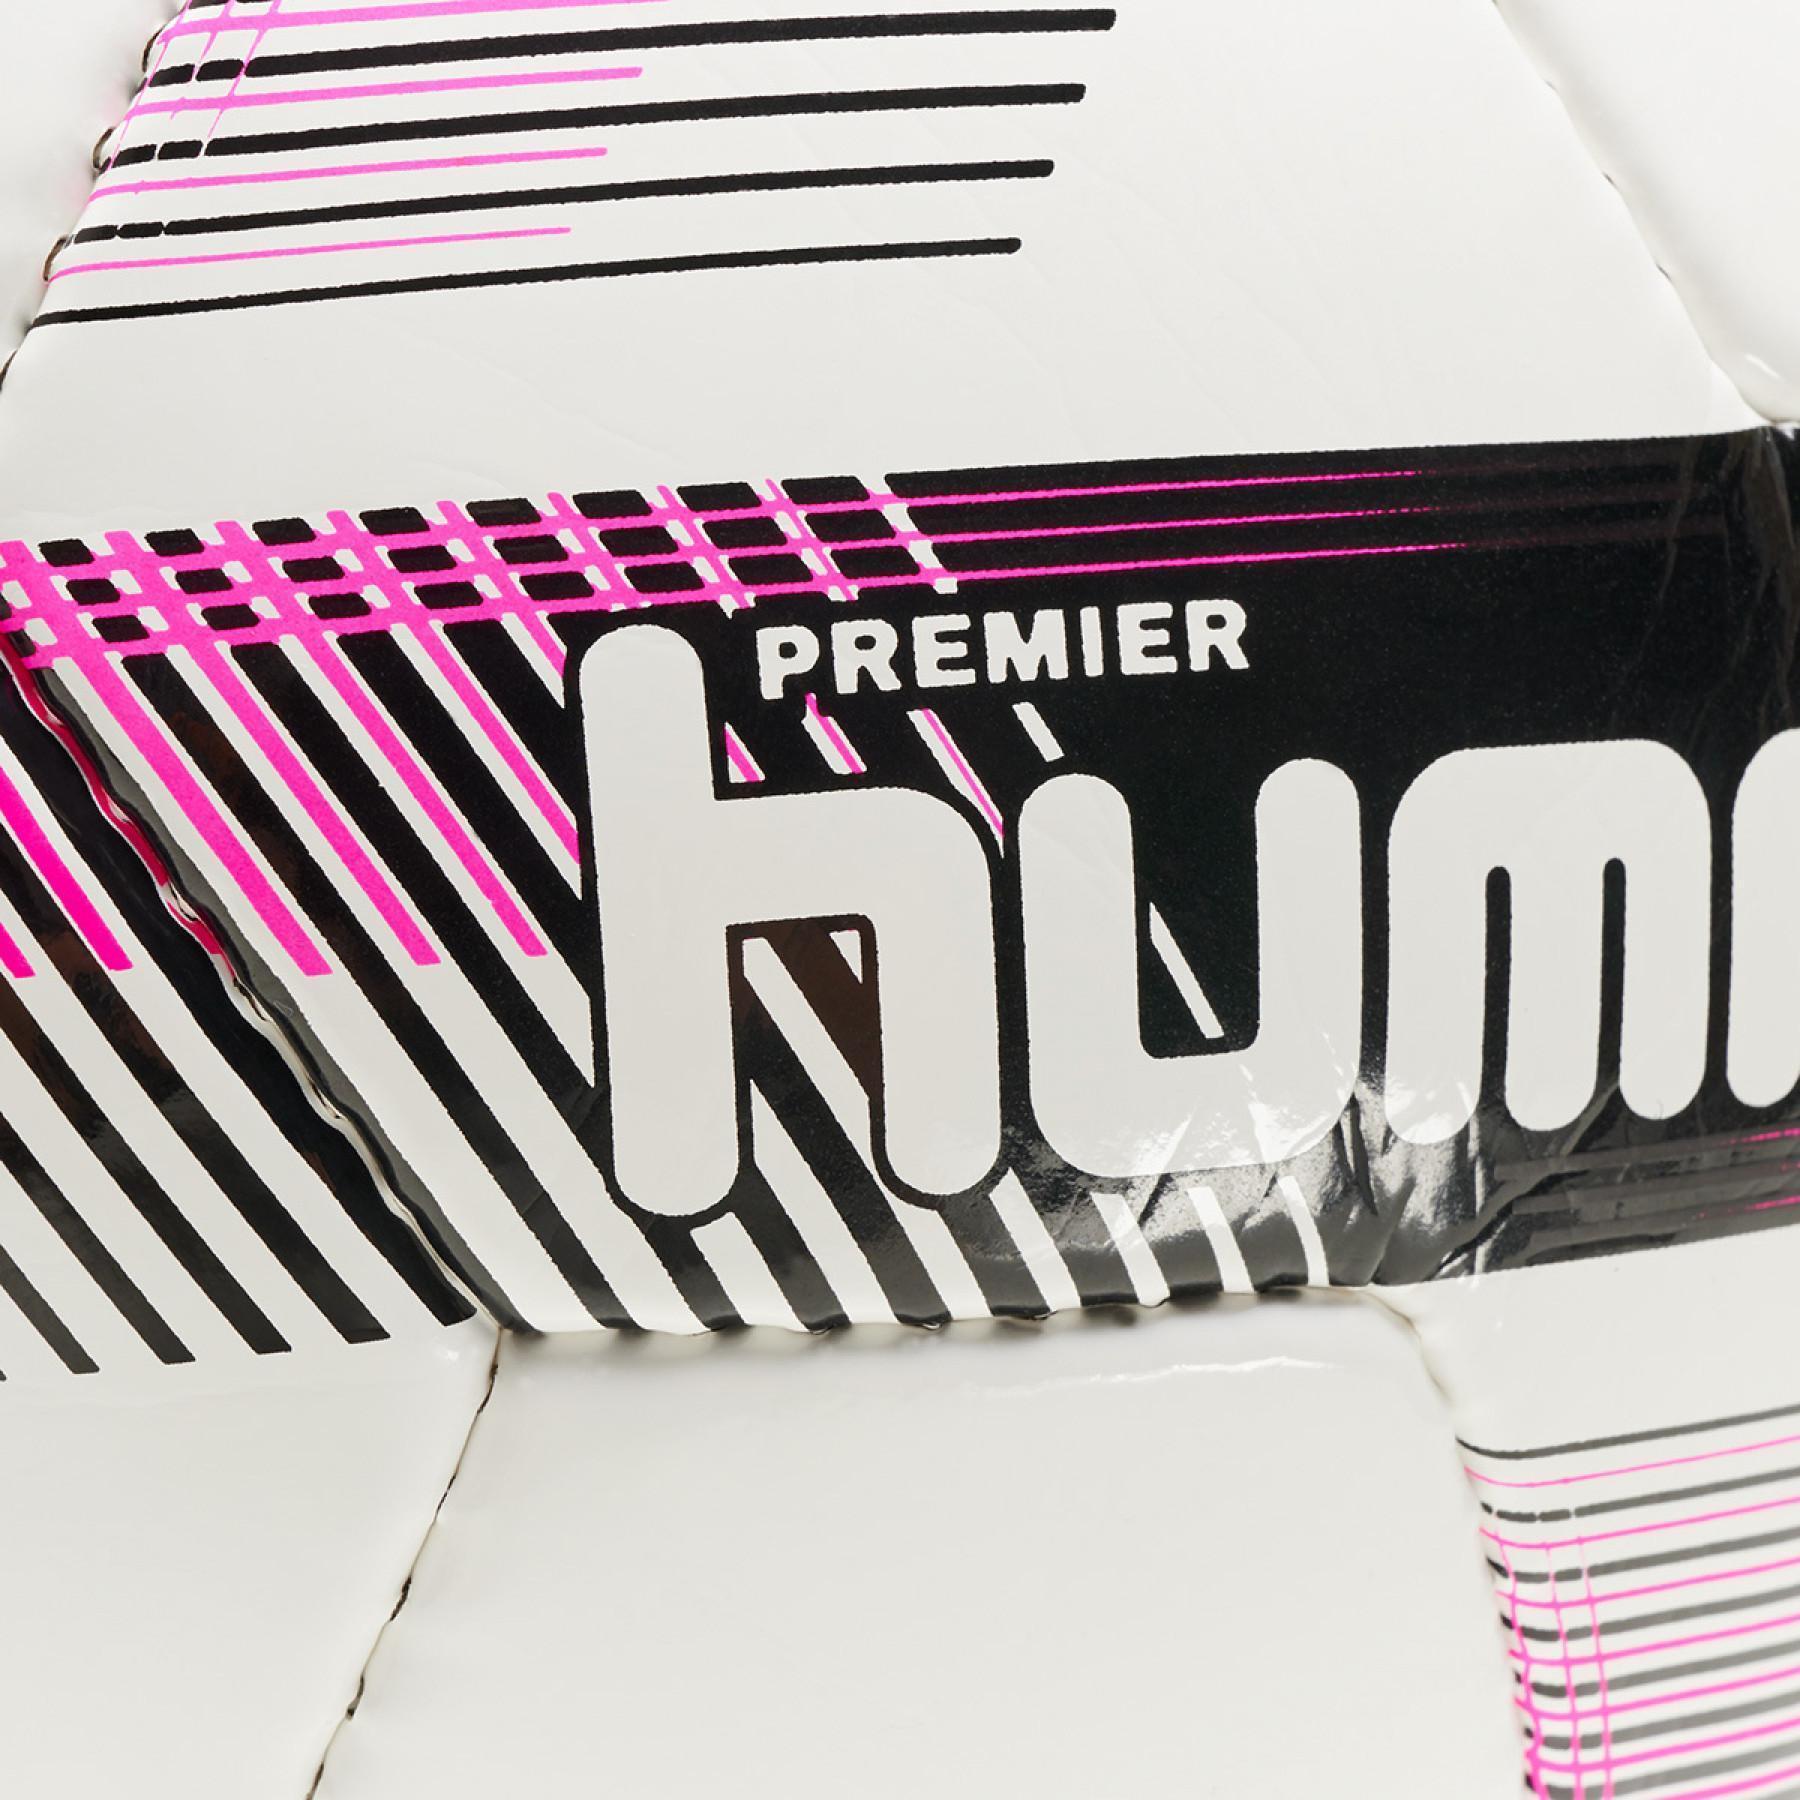 Balón Hummel Premier Football